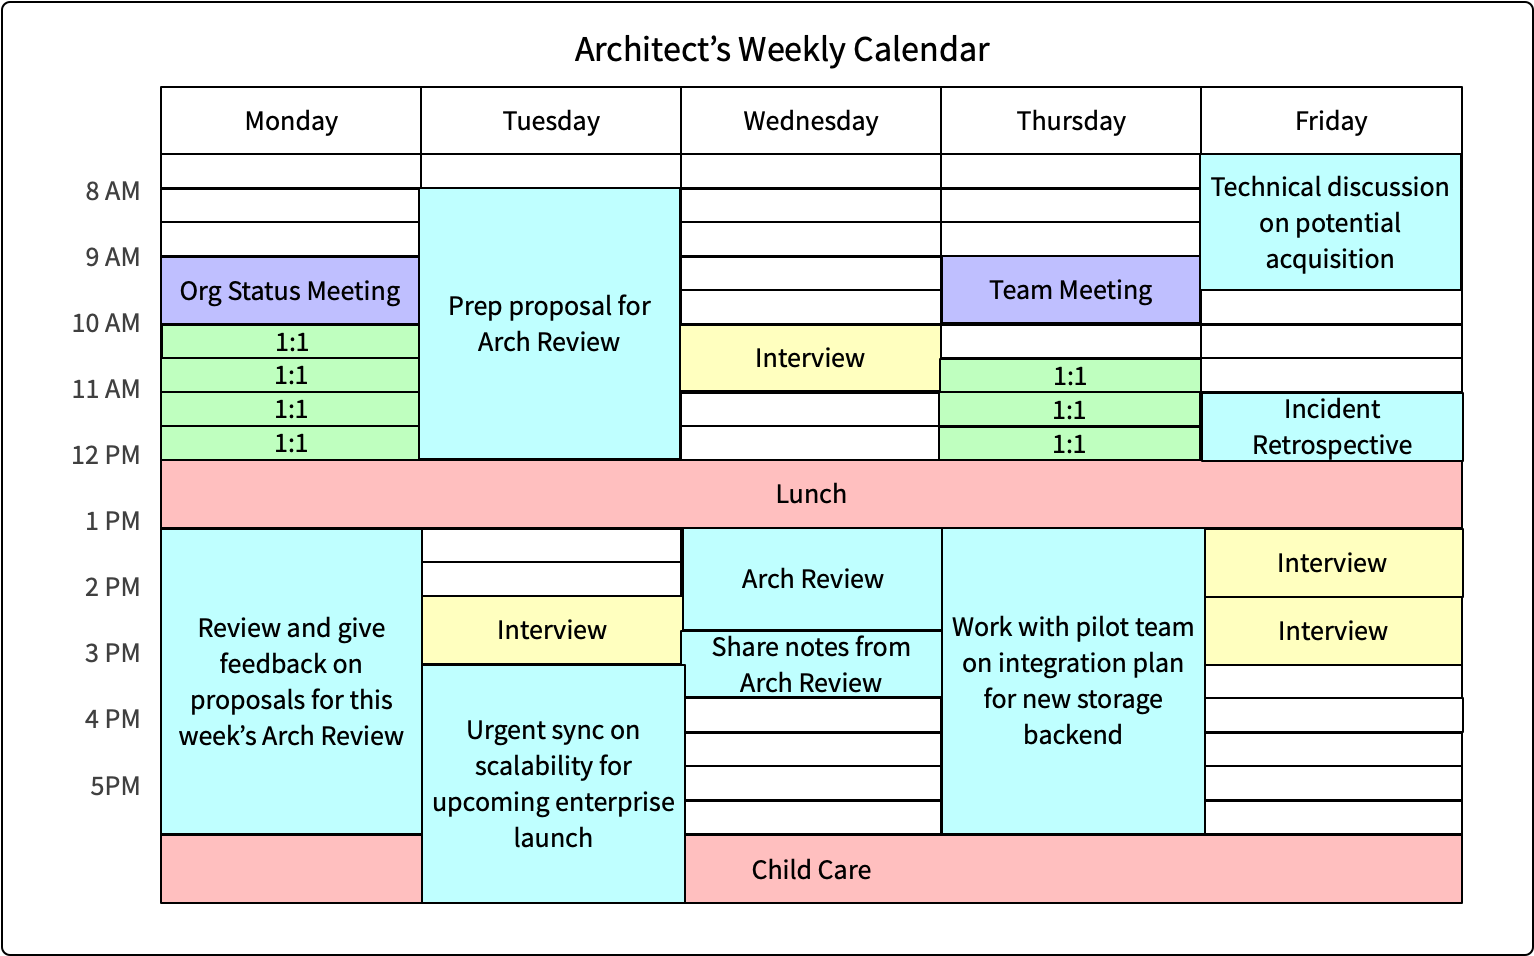 Example calendar for Architect archetype